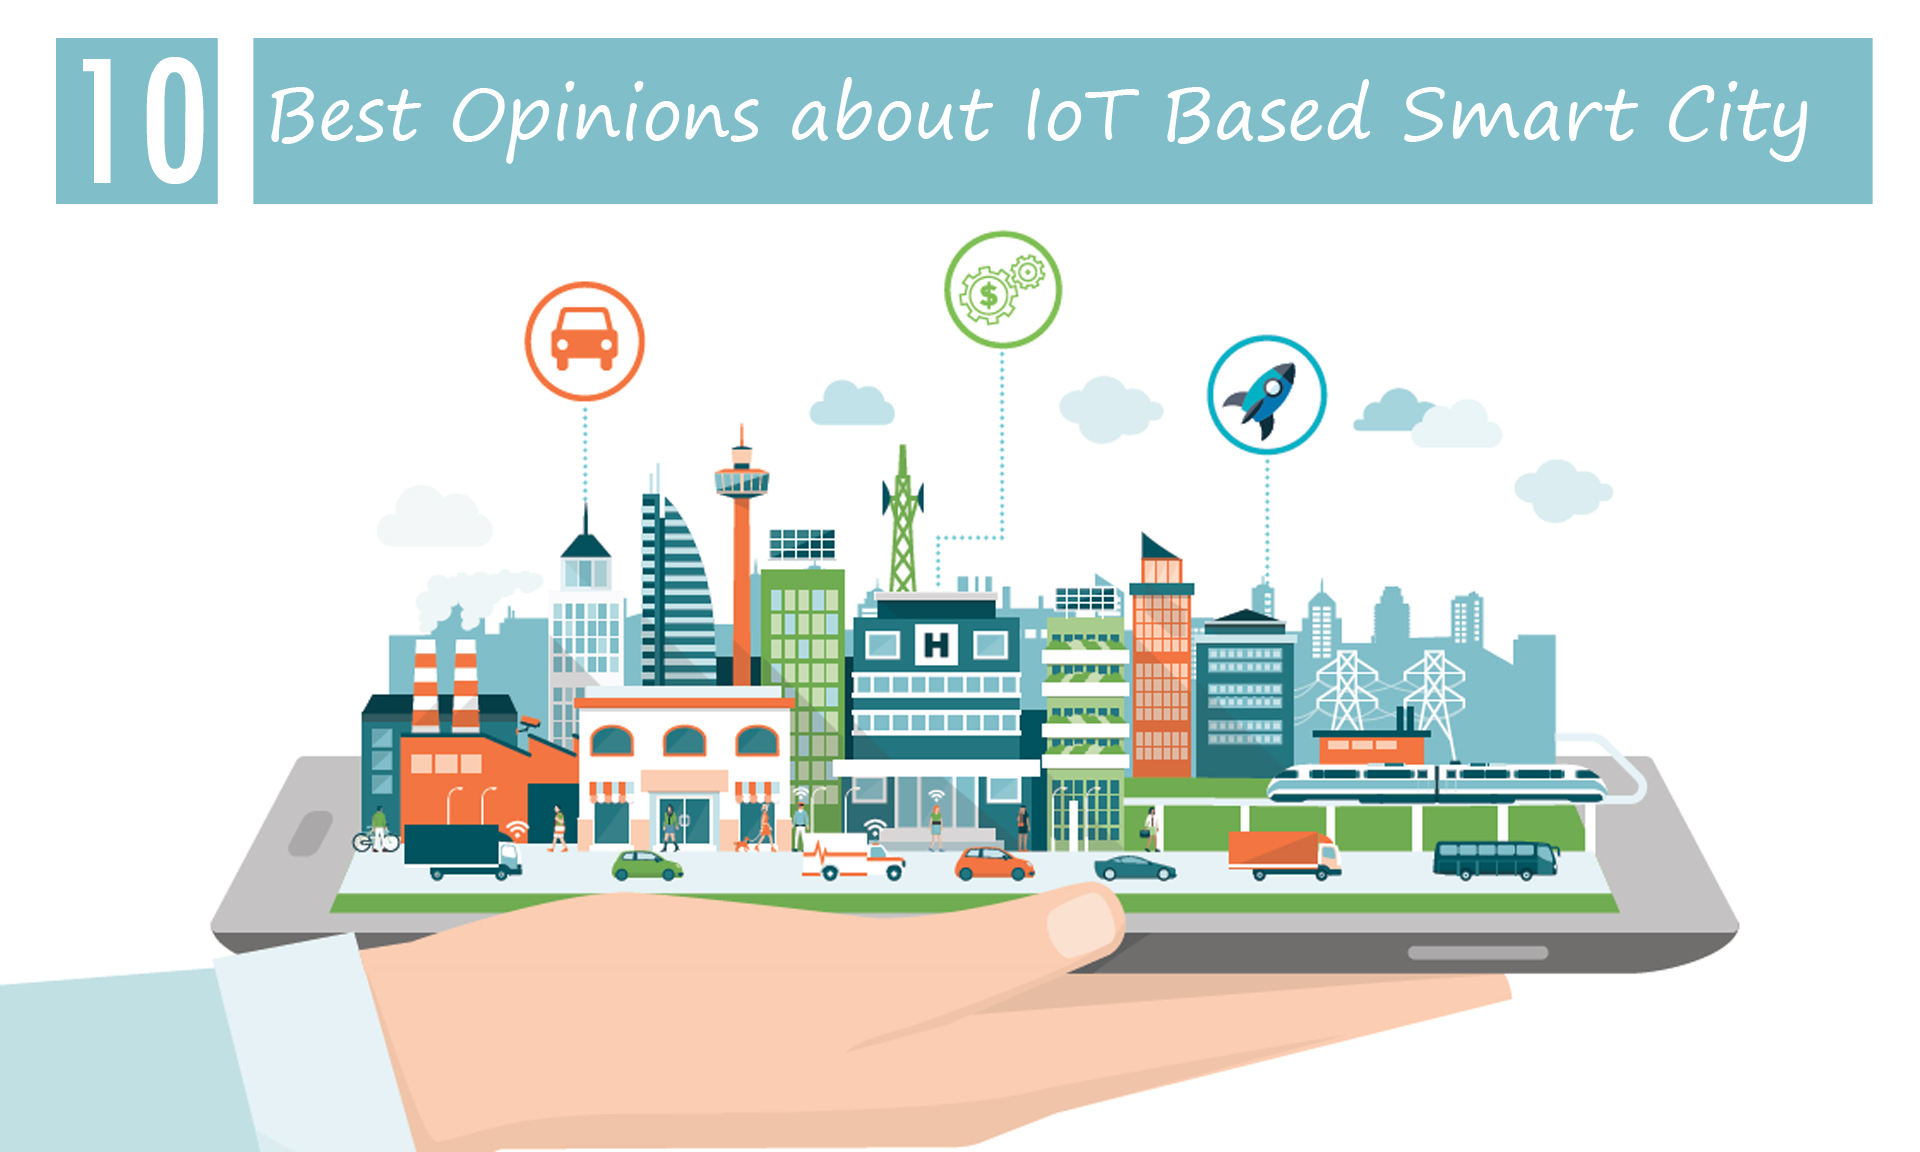 IoT Based Smart Cities